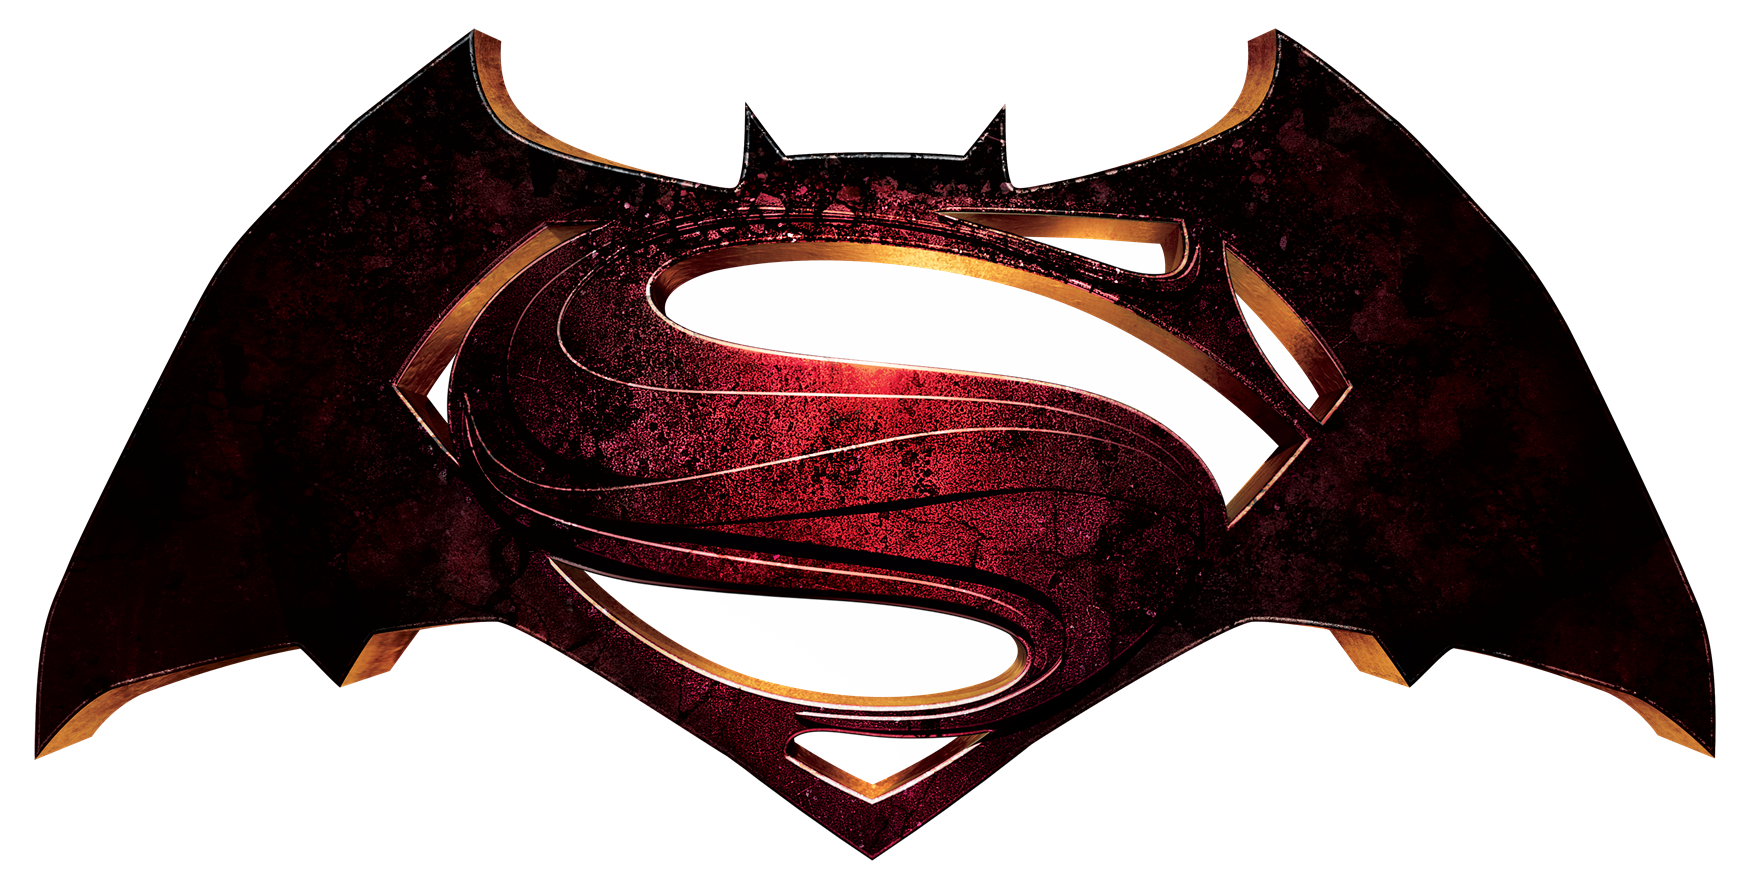 Batman V Superman Dawn Of Justice Transparent PNG Image